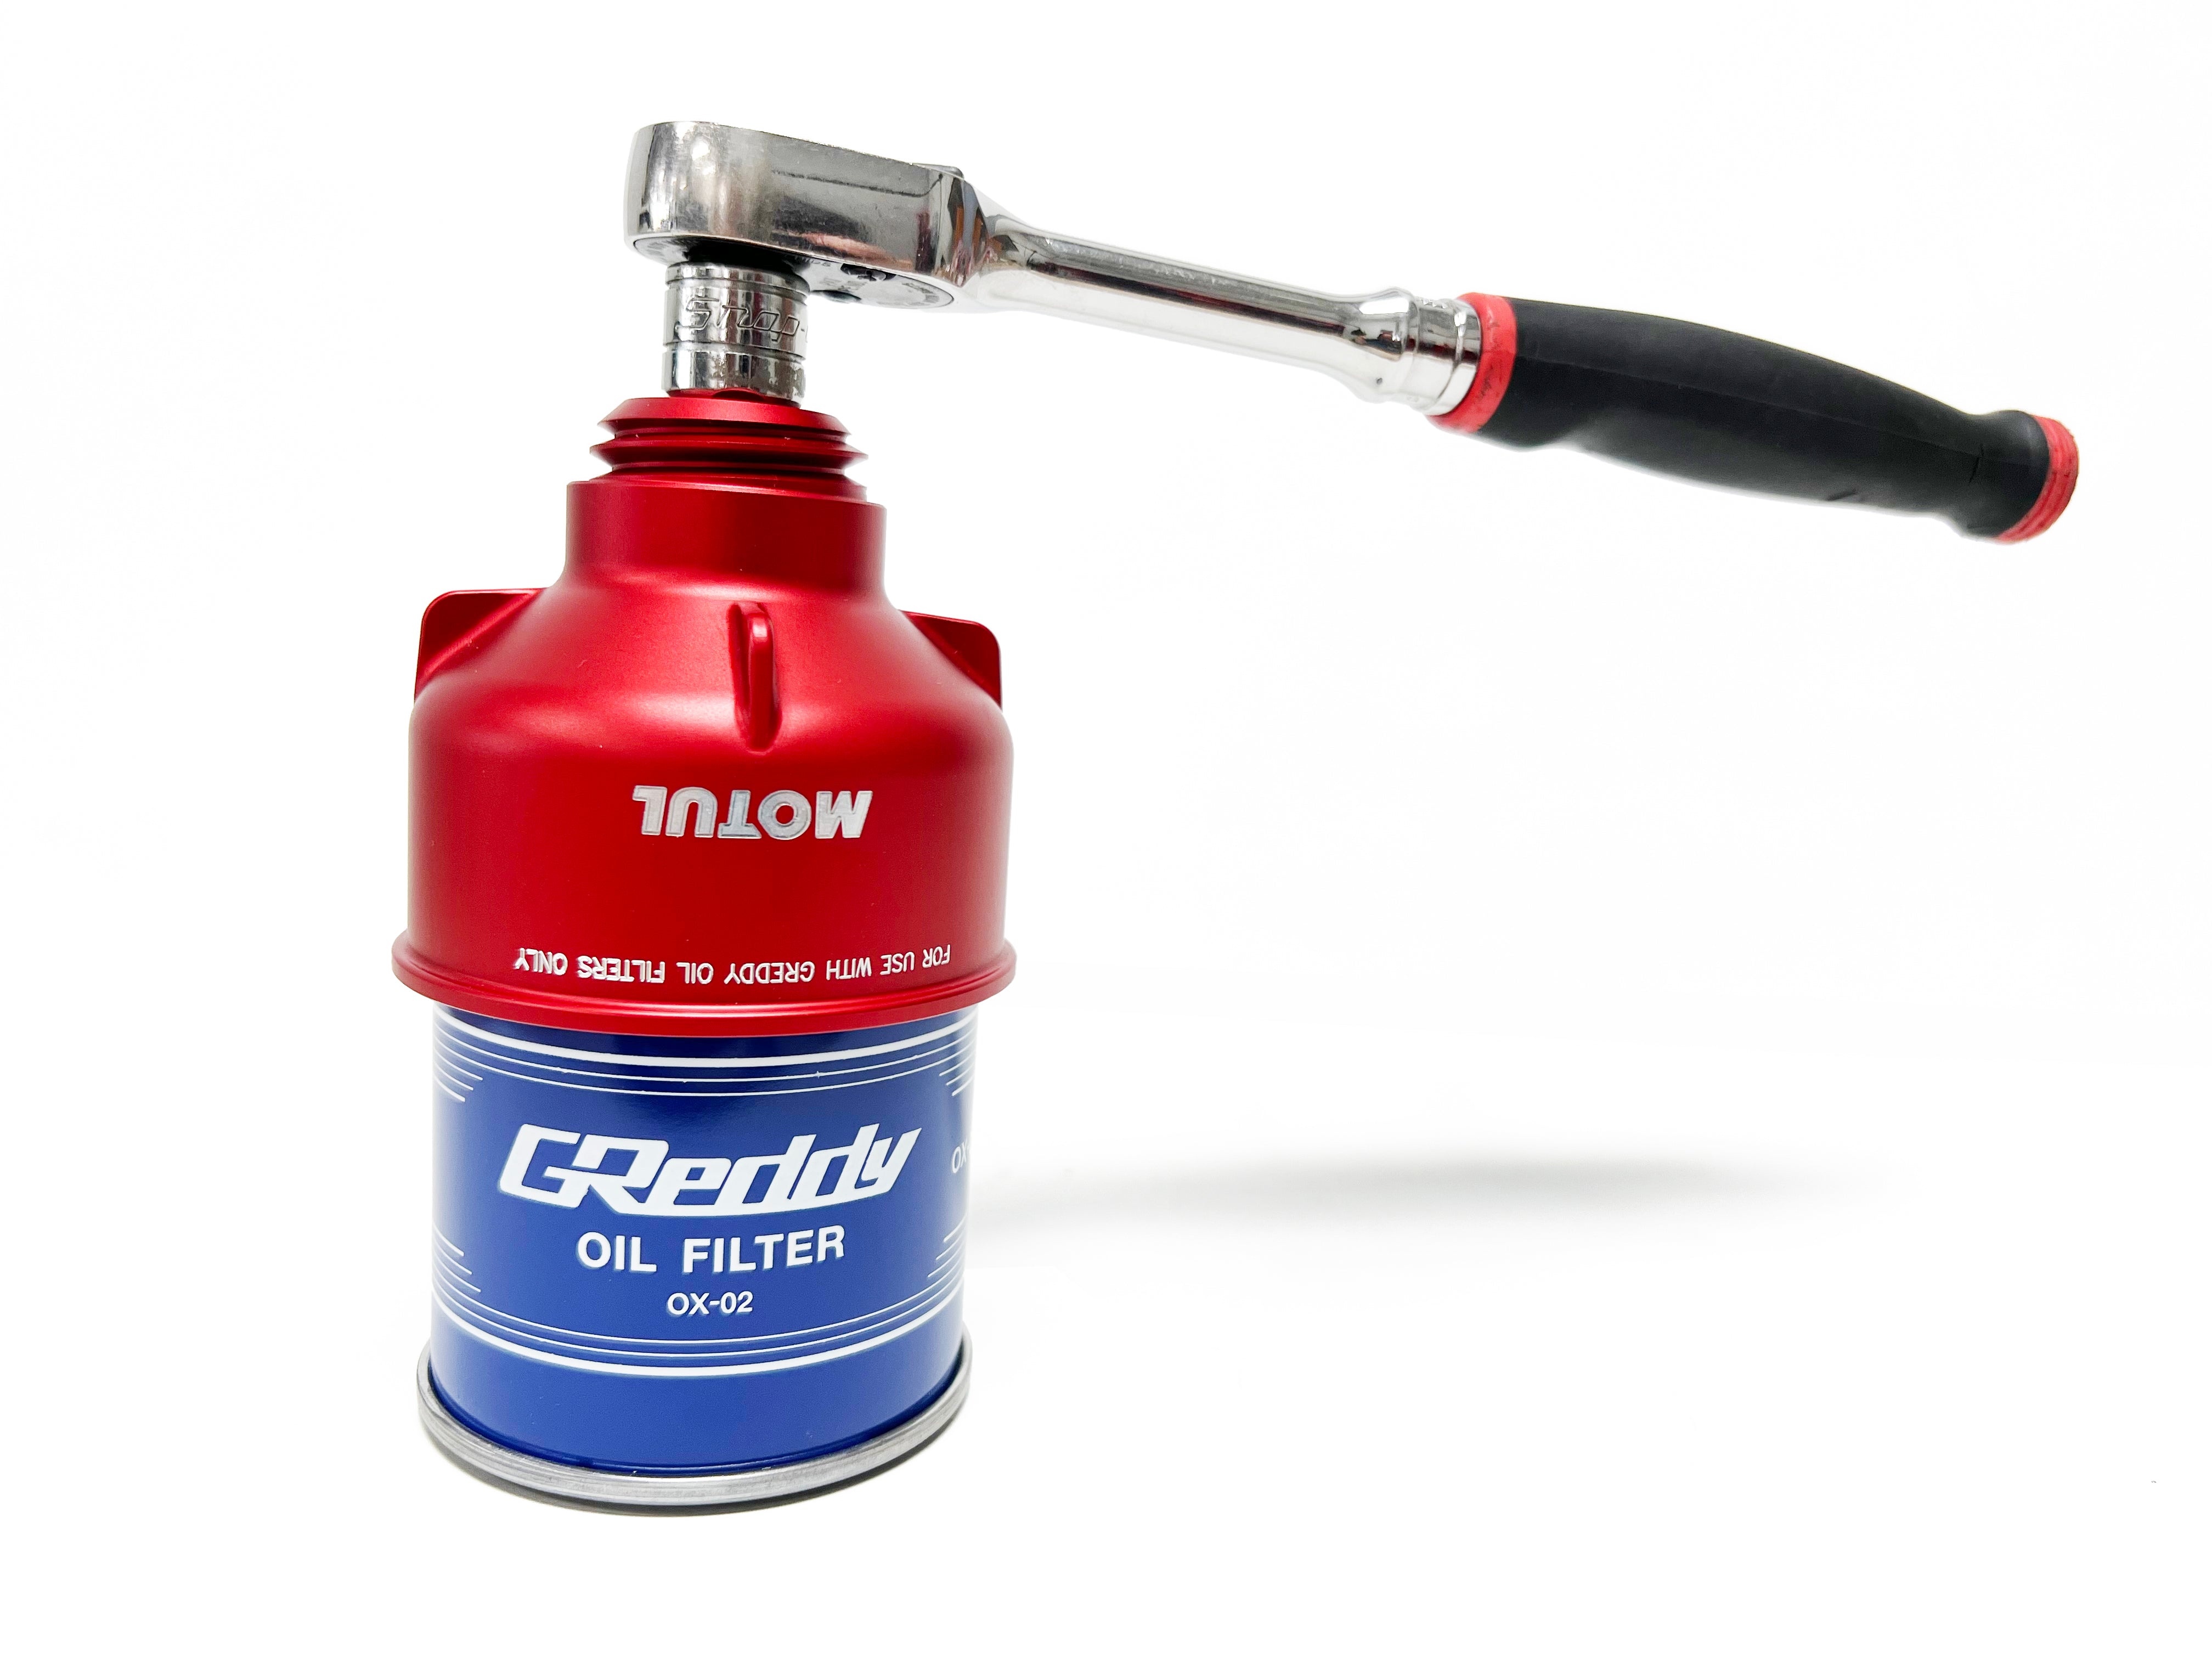 GReddy X Motul Aluminum Funnel / Oil Filter Removal Tool & GReddy Sports Oil Filter Set(s)